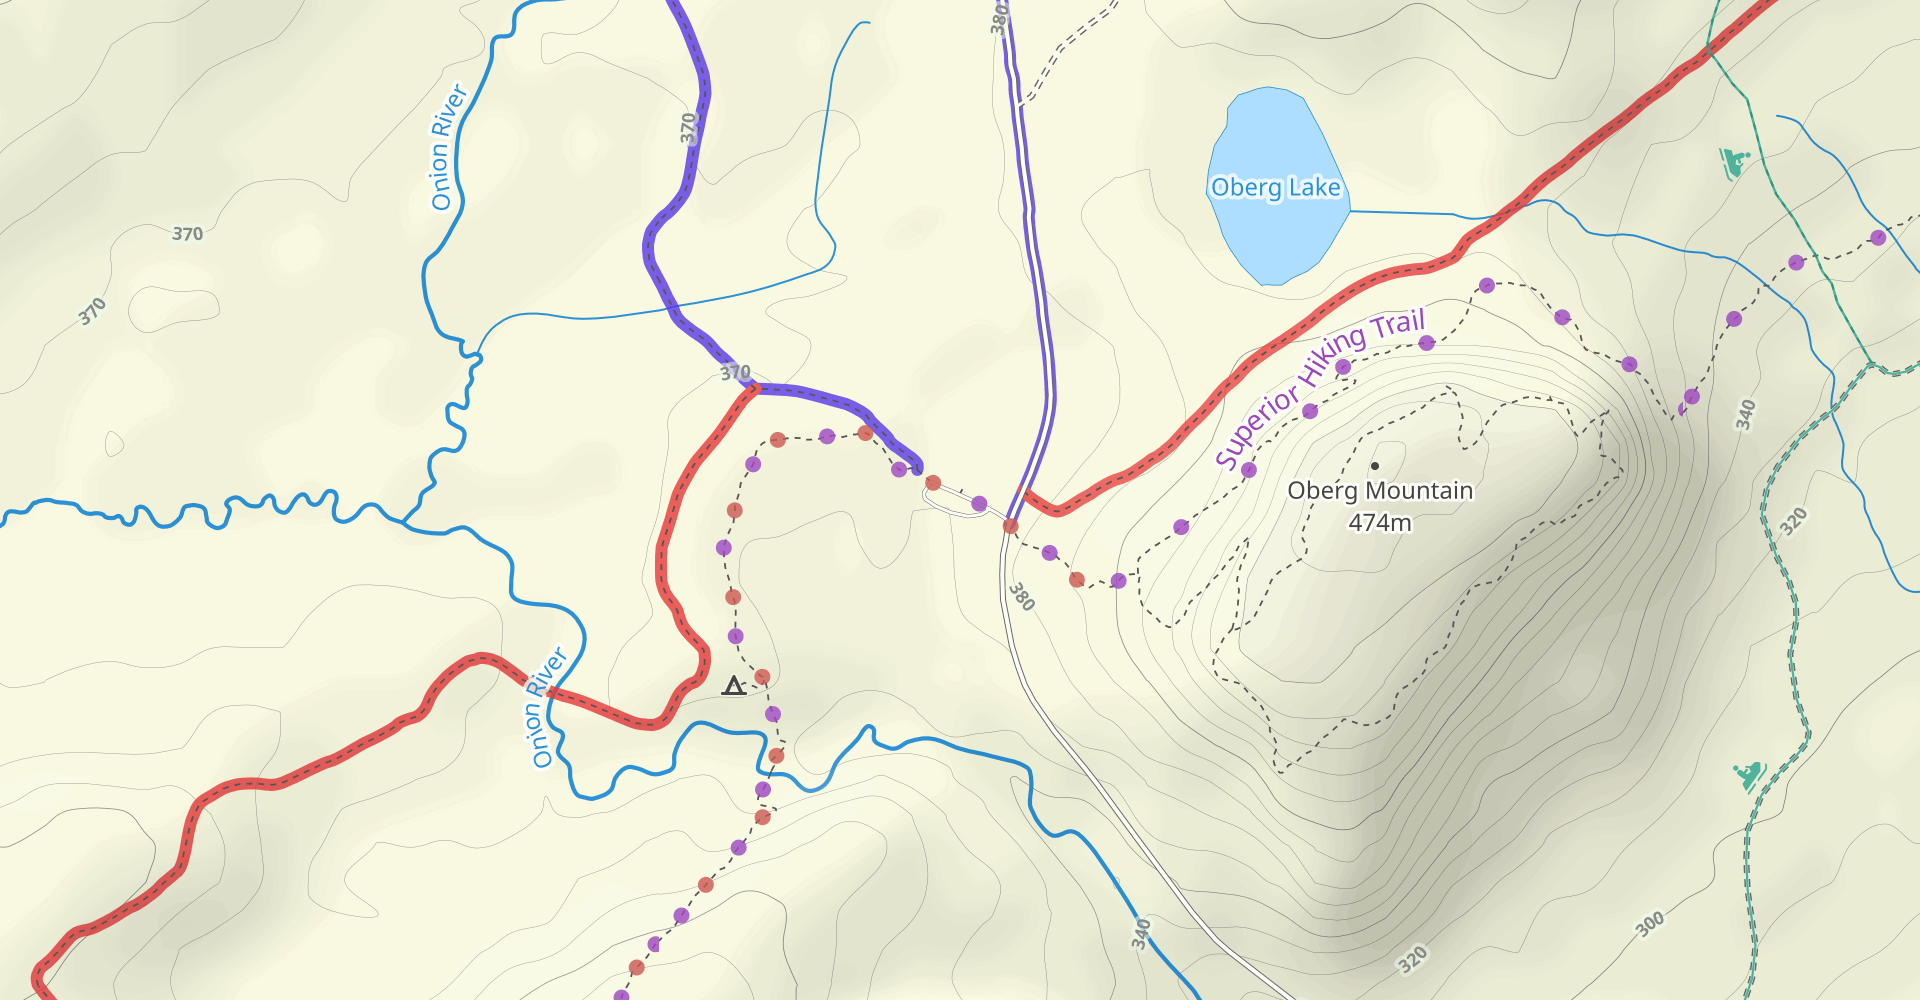 Oberg Mountain Loop Via Superior Hiking Trail